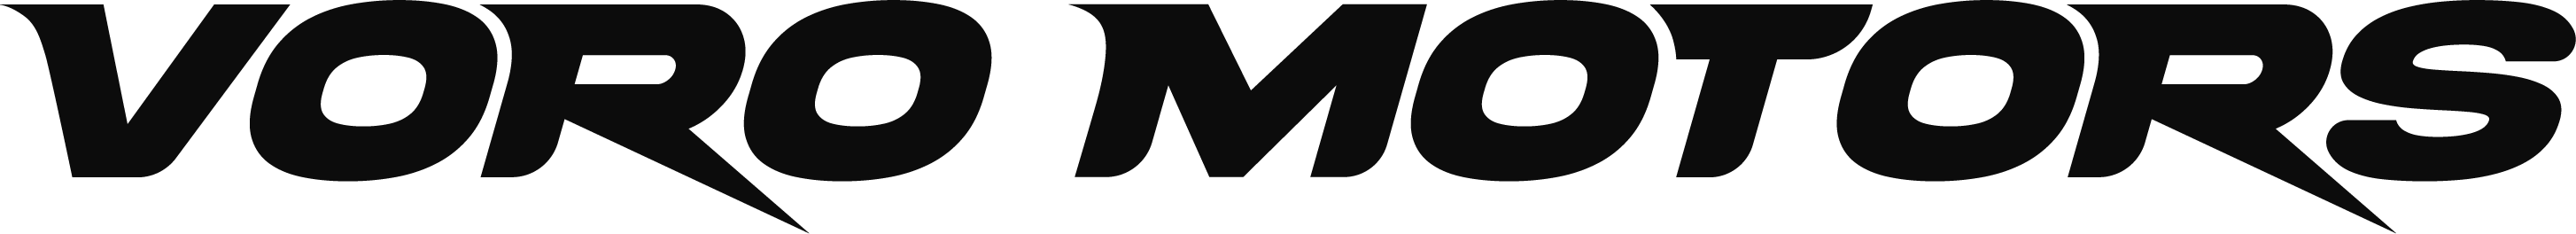 voromotors logo